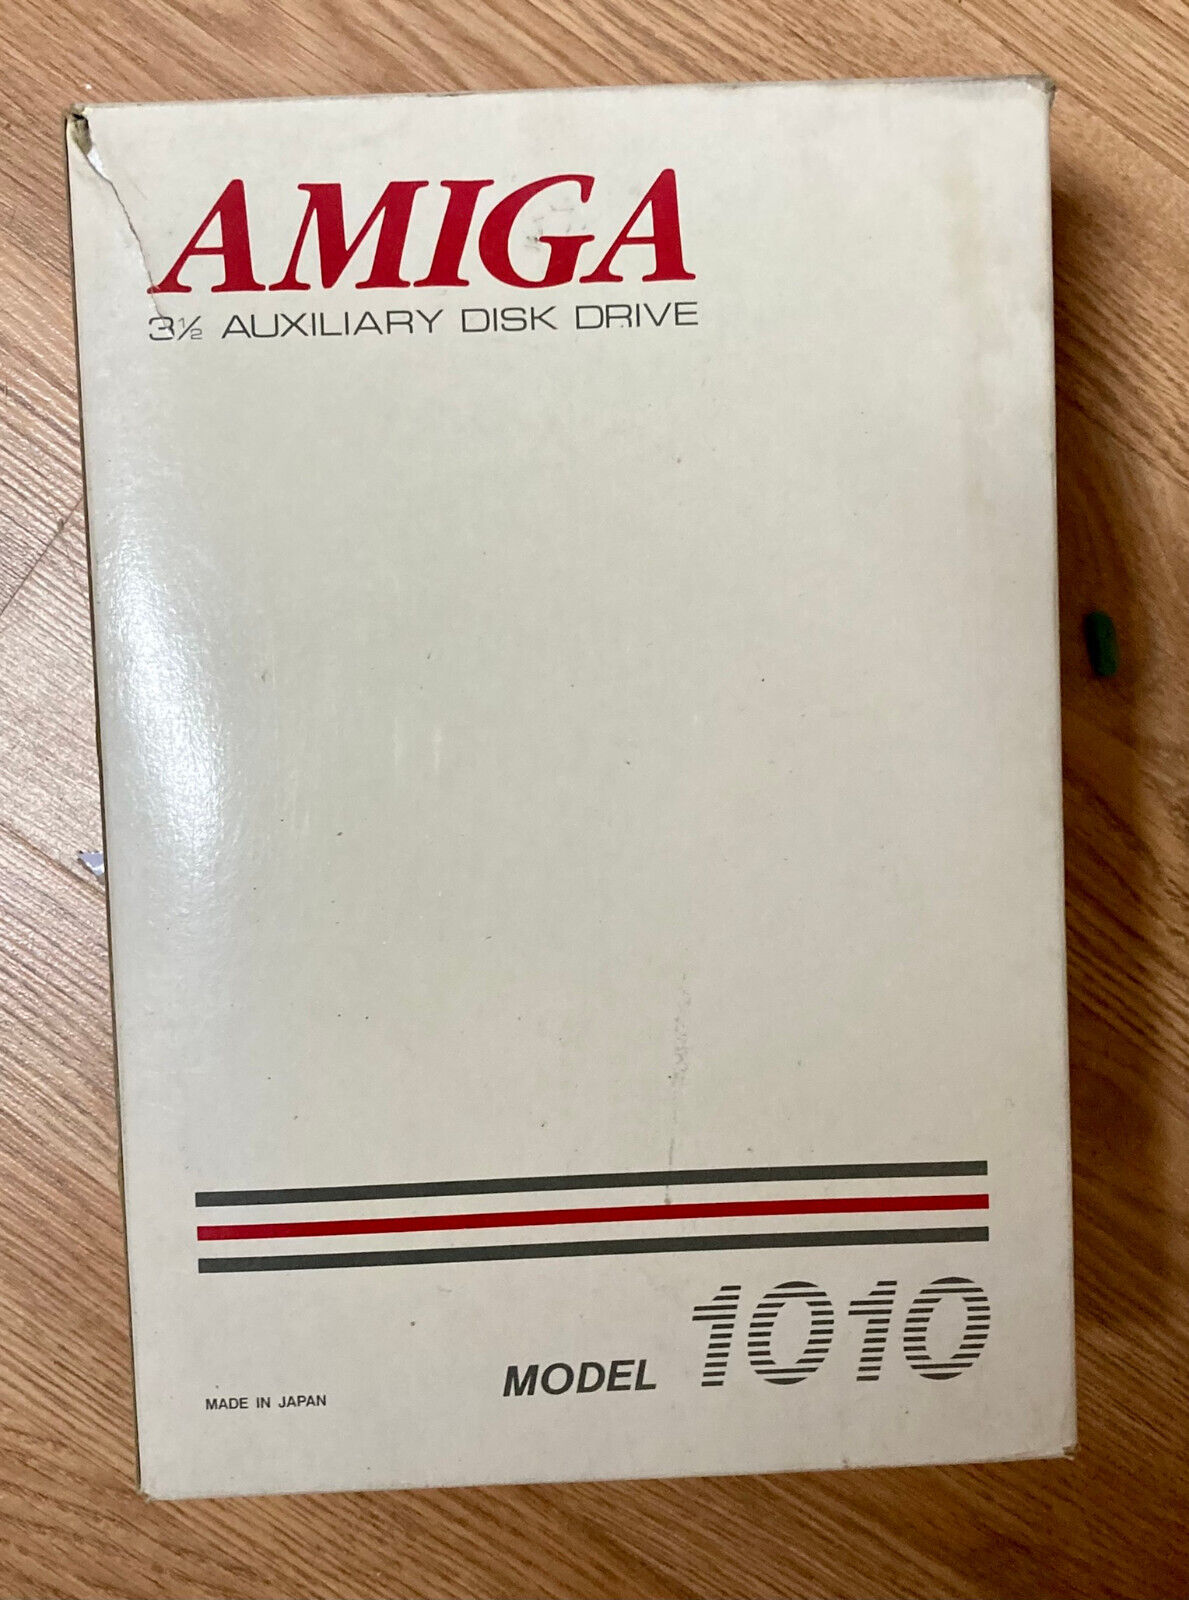 Commodore Amiga 1010 External 3.5